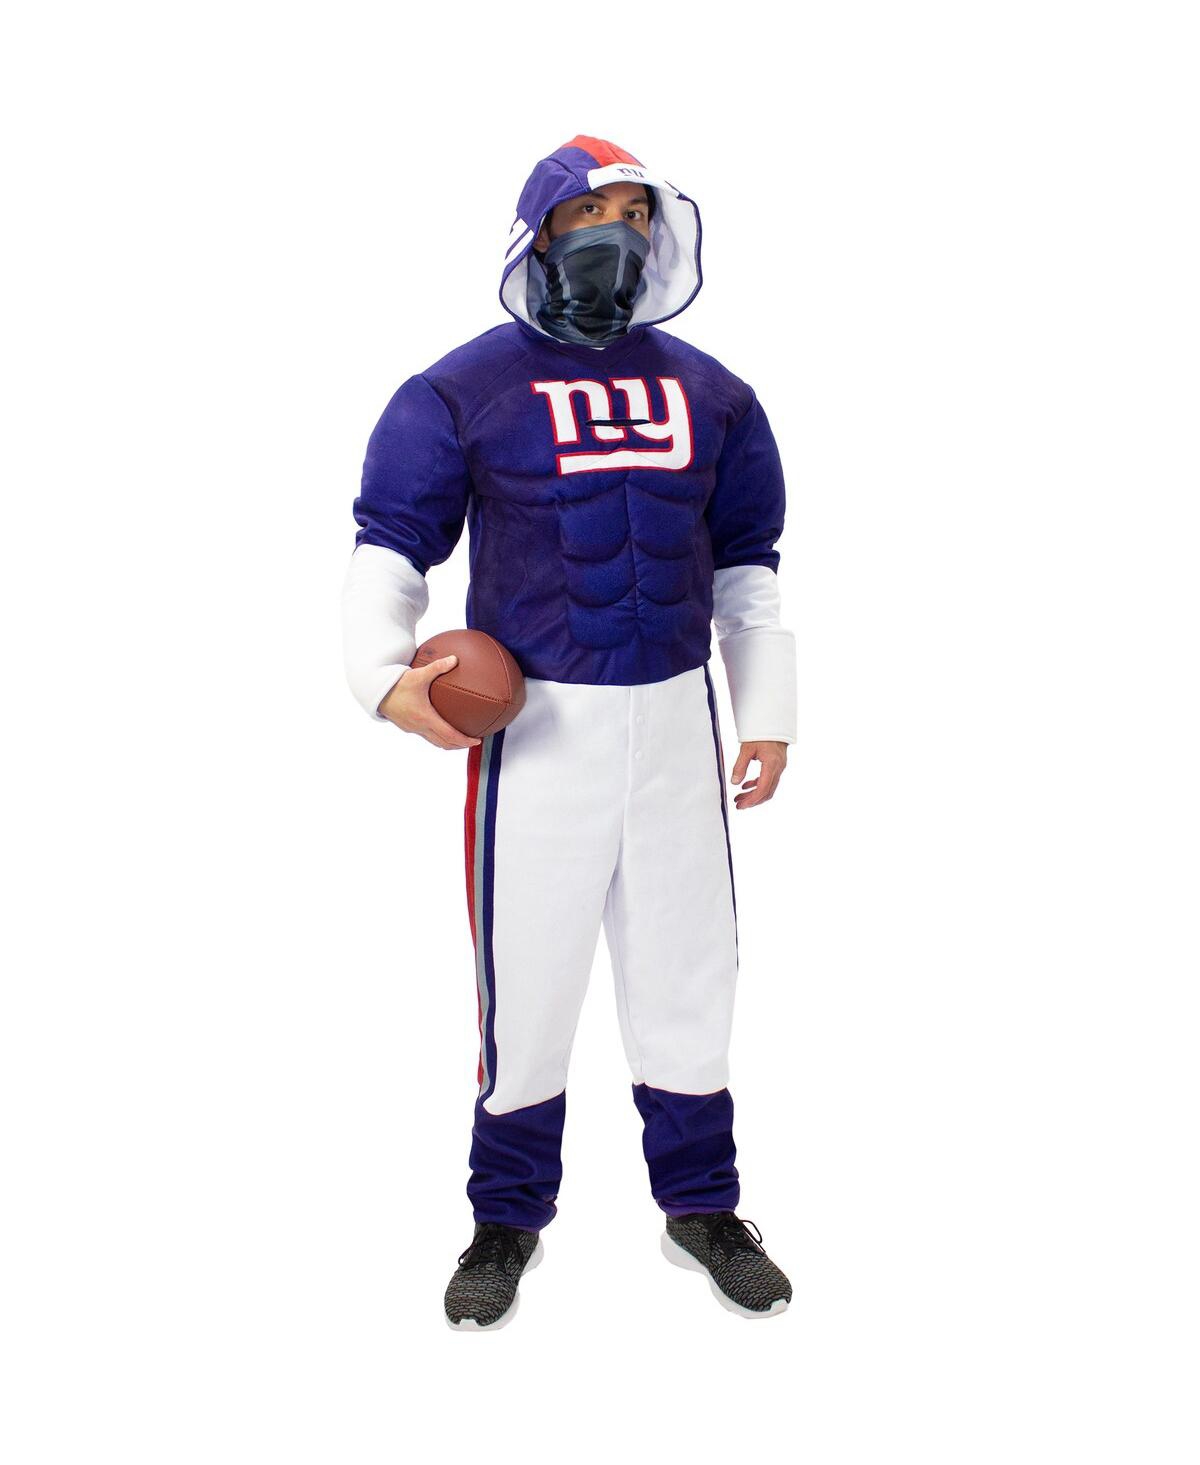 Men's Royal New York Giants Game Day Costume - Royal